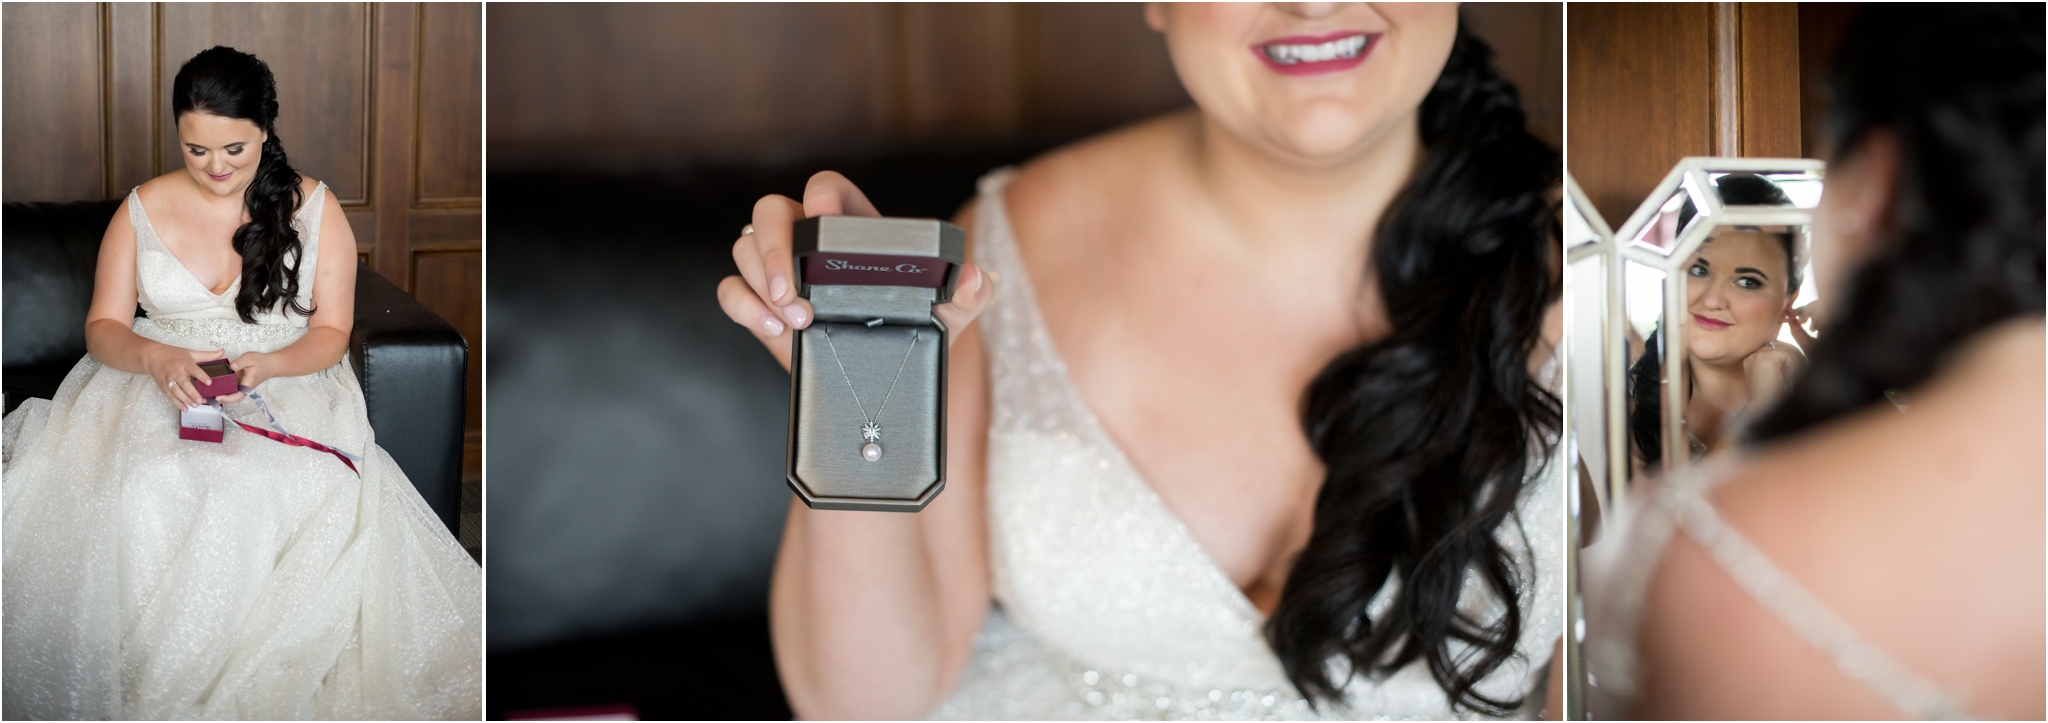 Regions Tower Wedding | Sarah and Rachel Wedding Photographers | Indianapolis, IN | Shane Co Wedding Jewelry